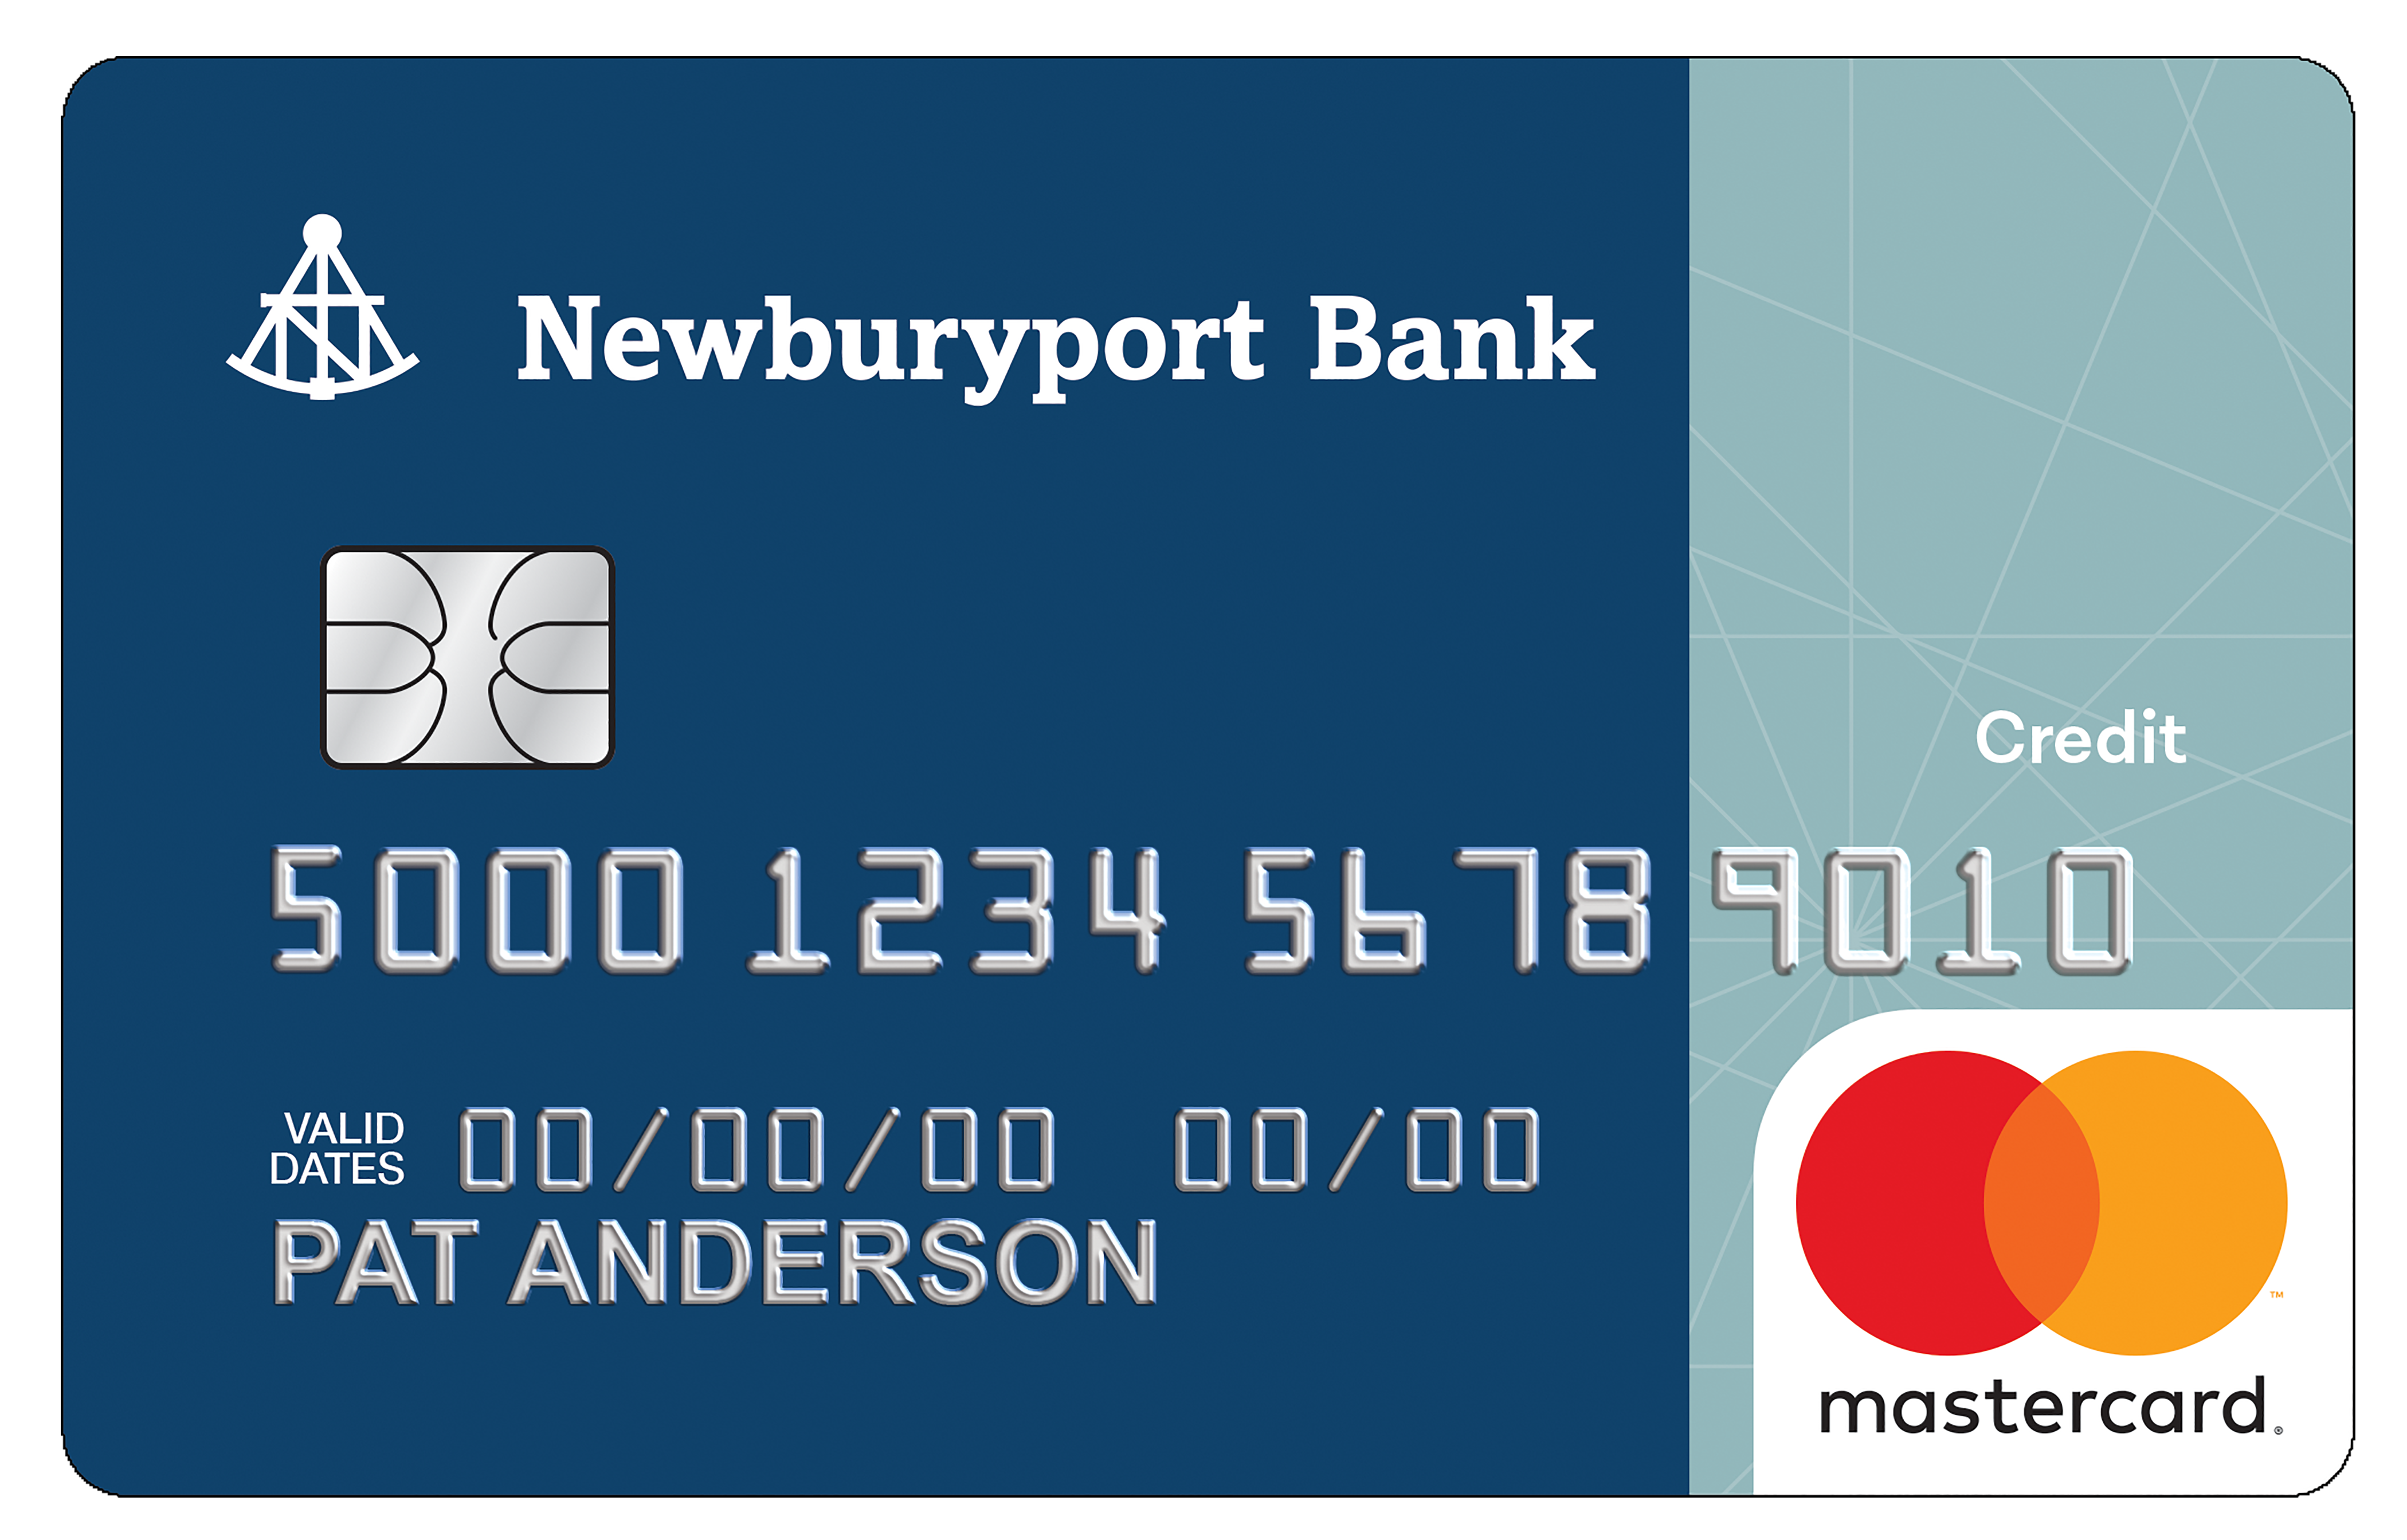 Newburyport Five Cents Savings Bank Travel Rewards+ Card